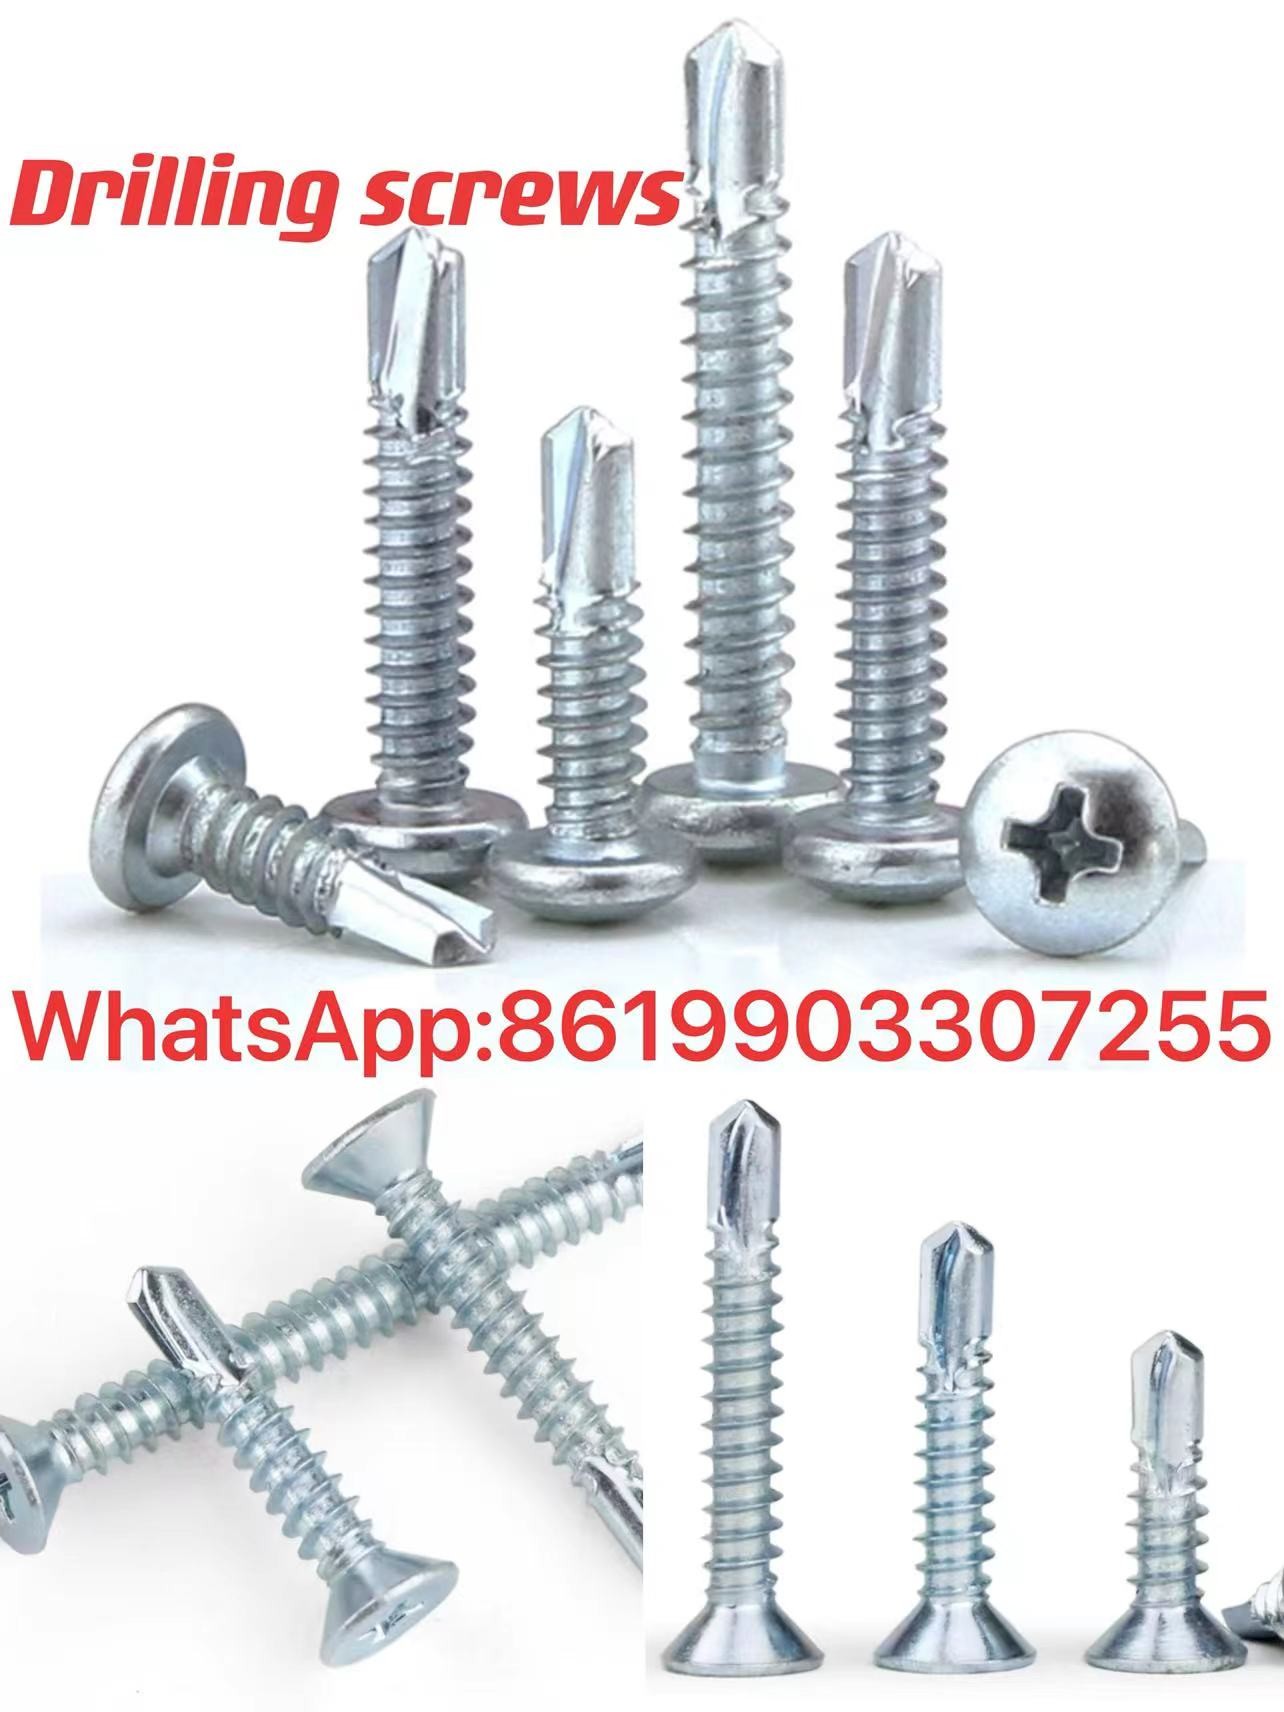 factory sales drillling screws WhatsApp:8619903307255-image